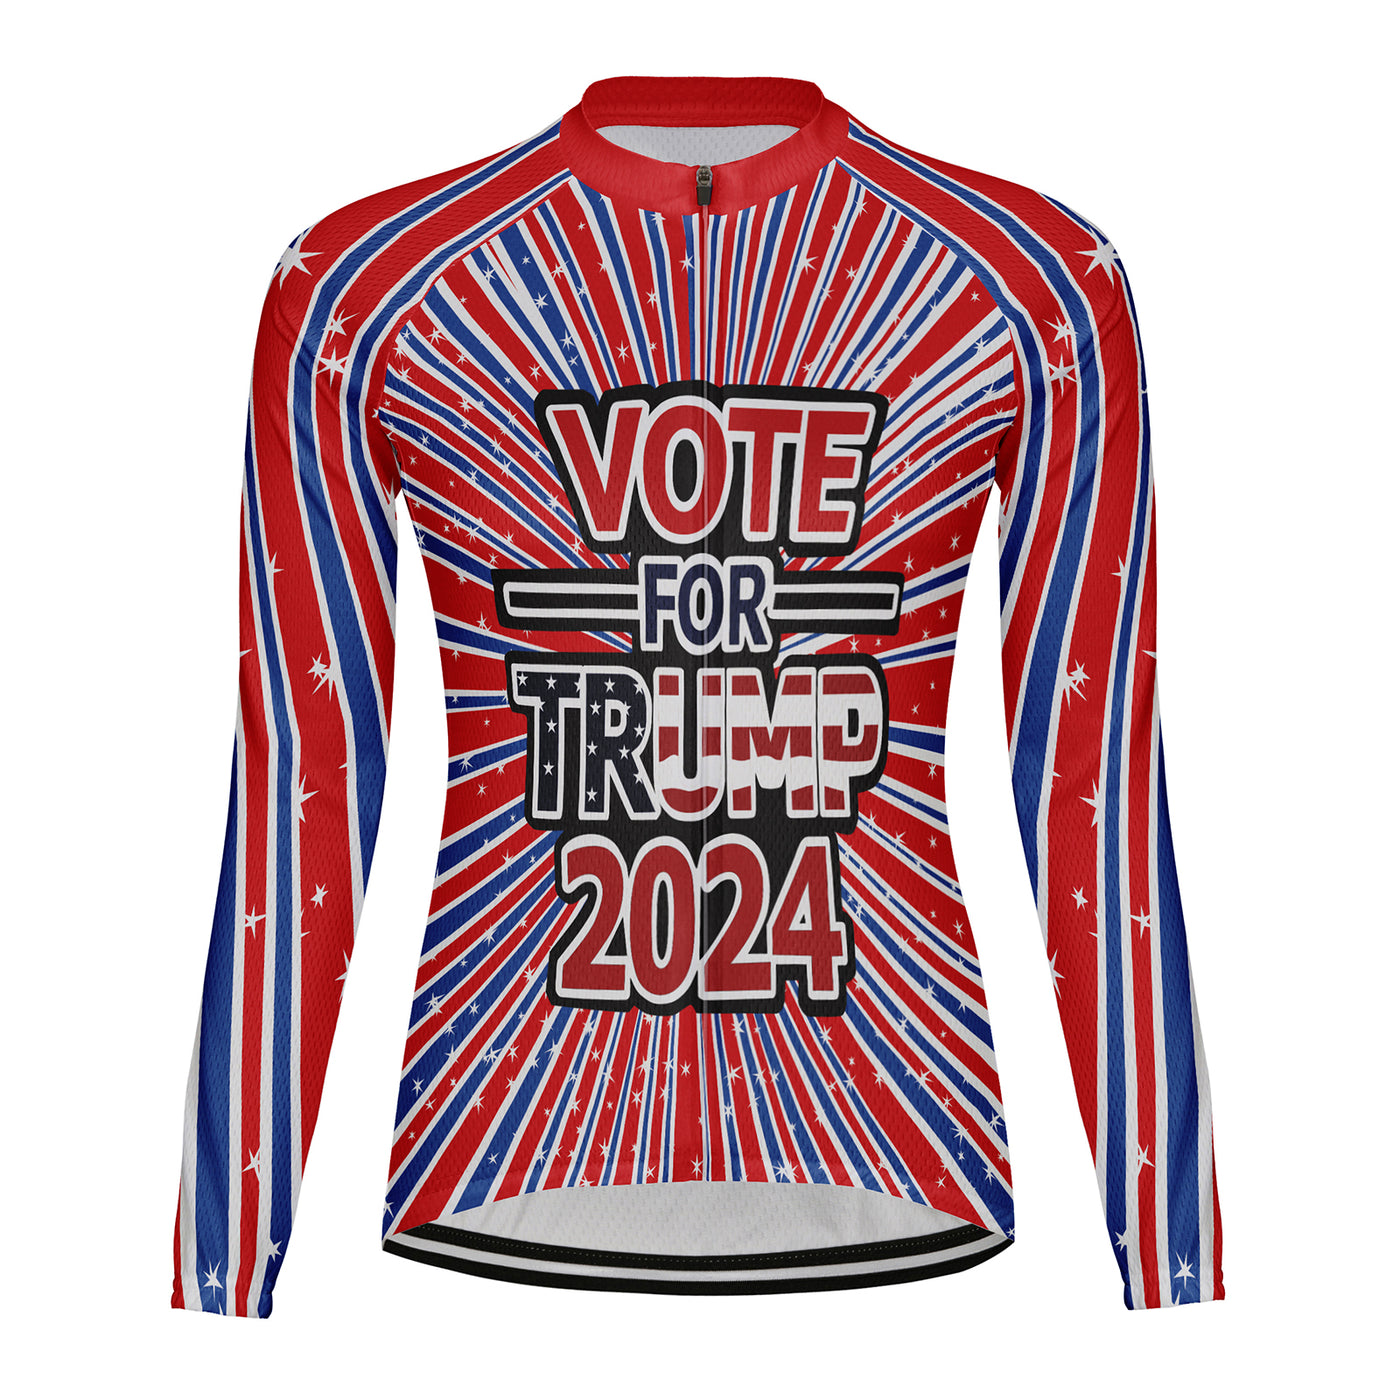 Customized Trump 2024 Women's Cycling Jersey Long Sleeve